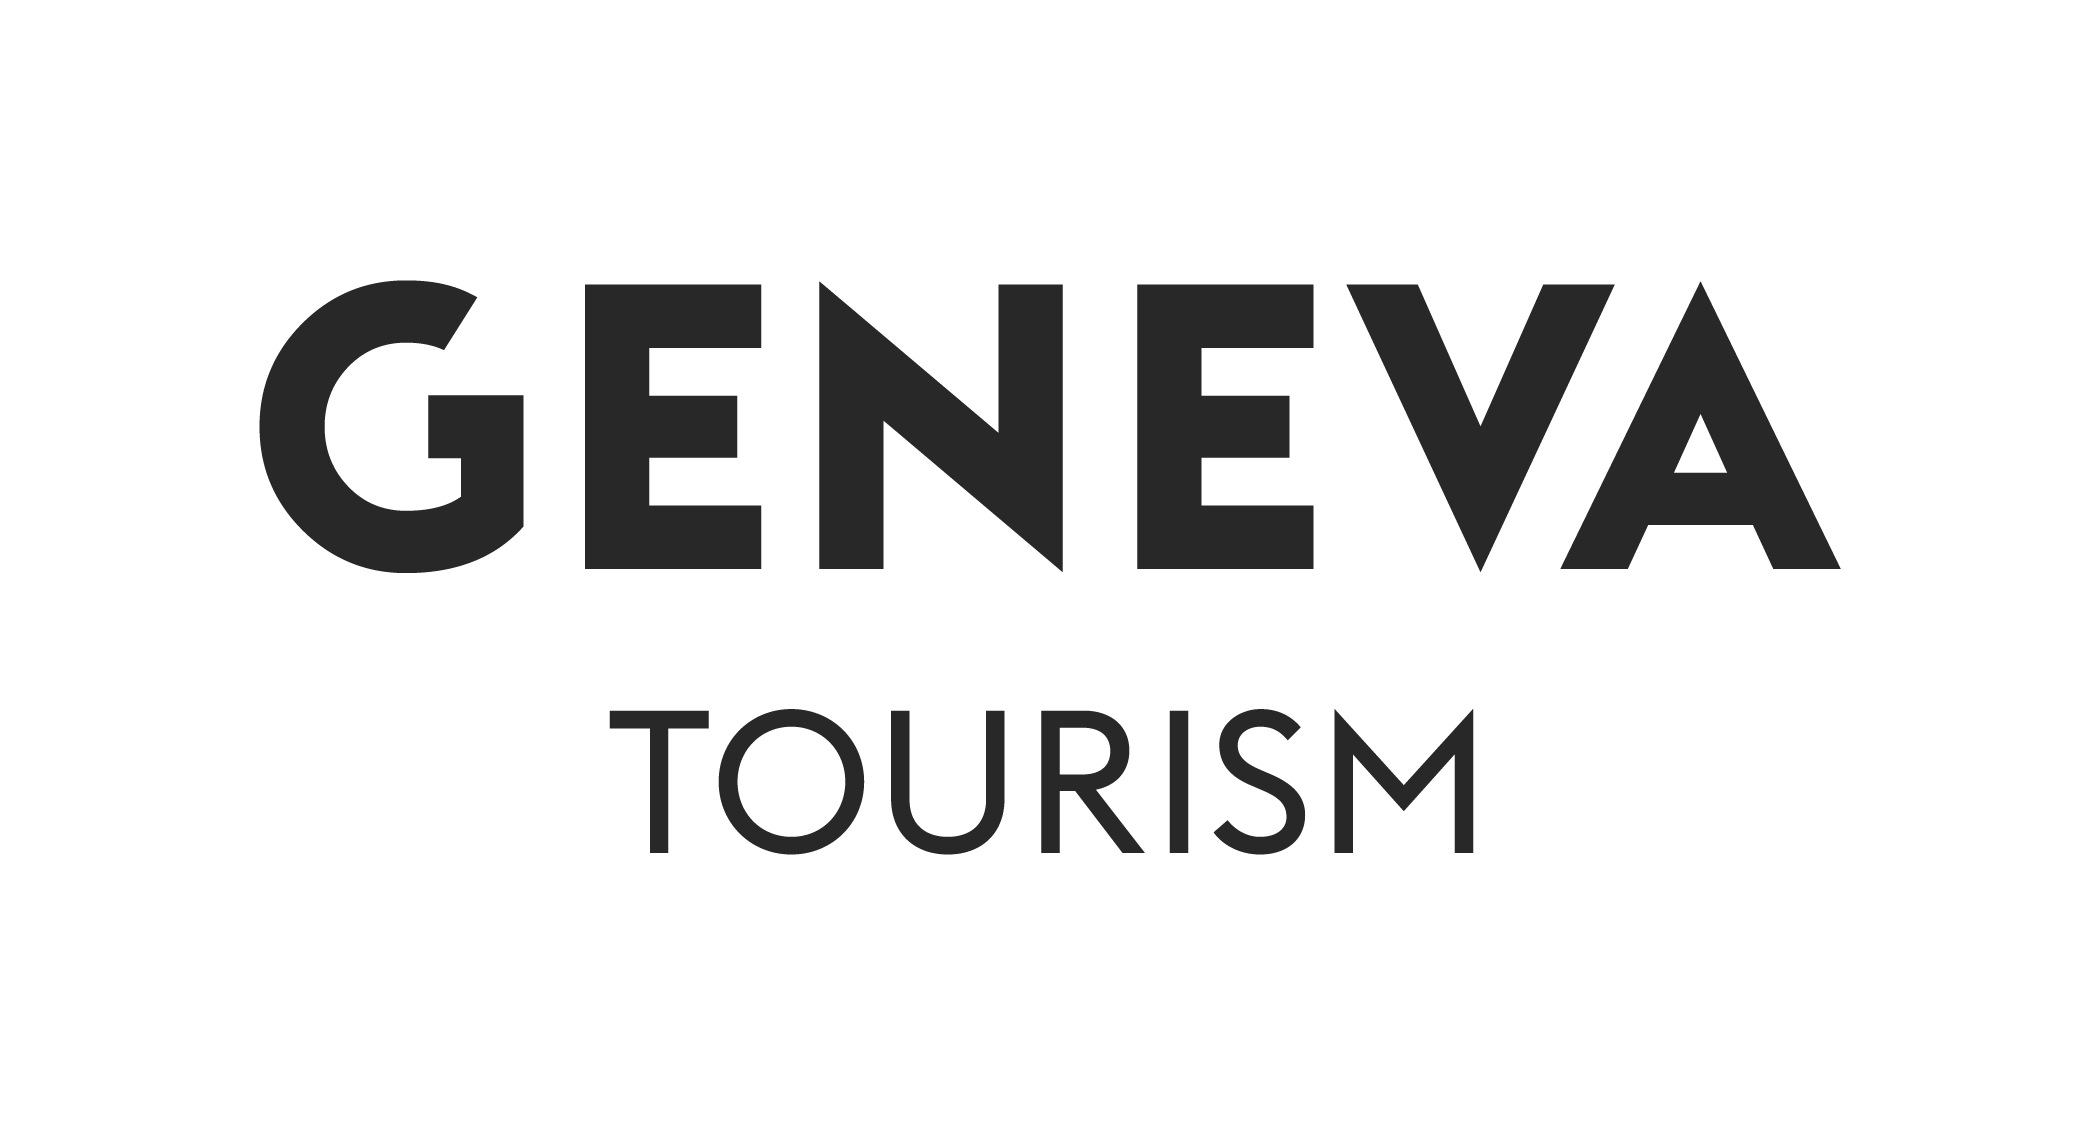 Geneva Tourism & Conventions Foundation's